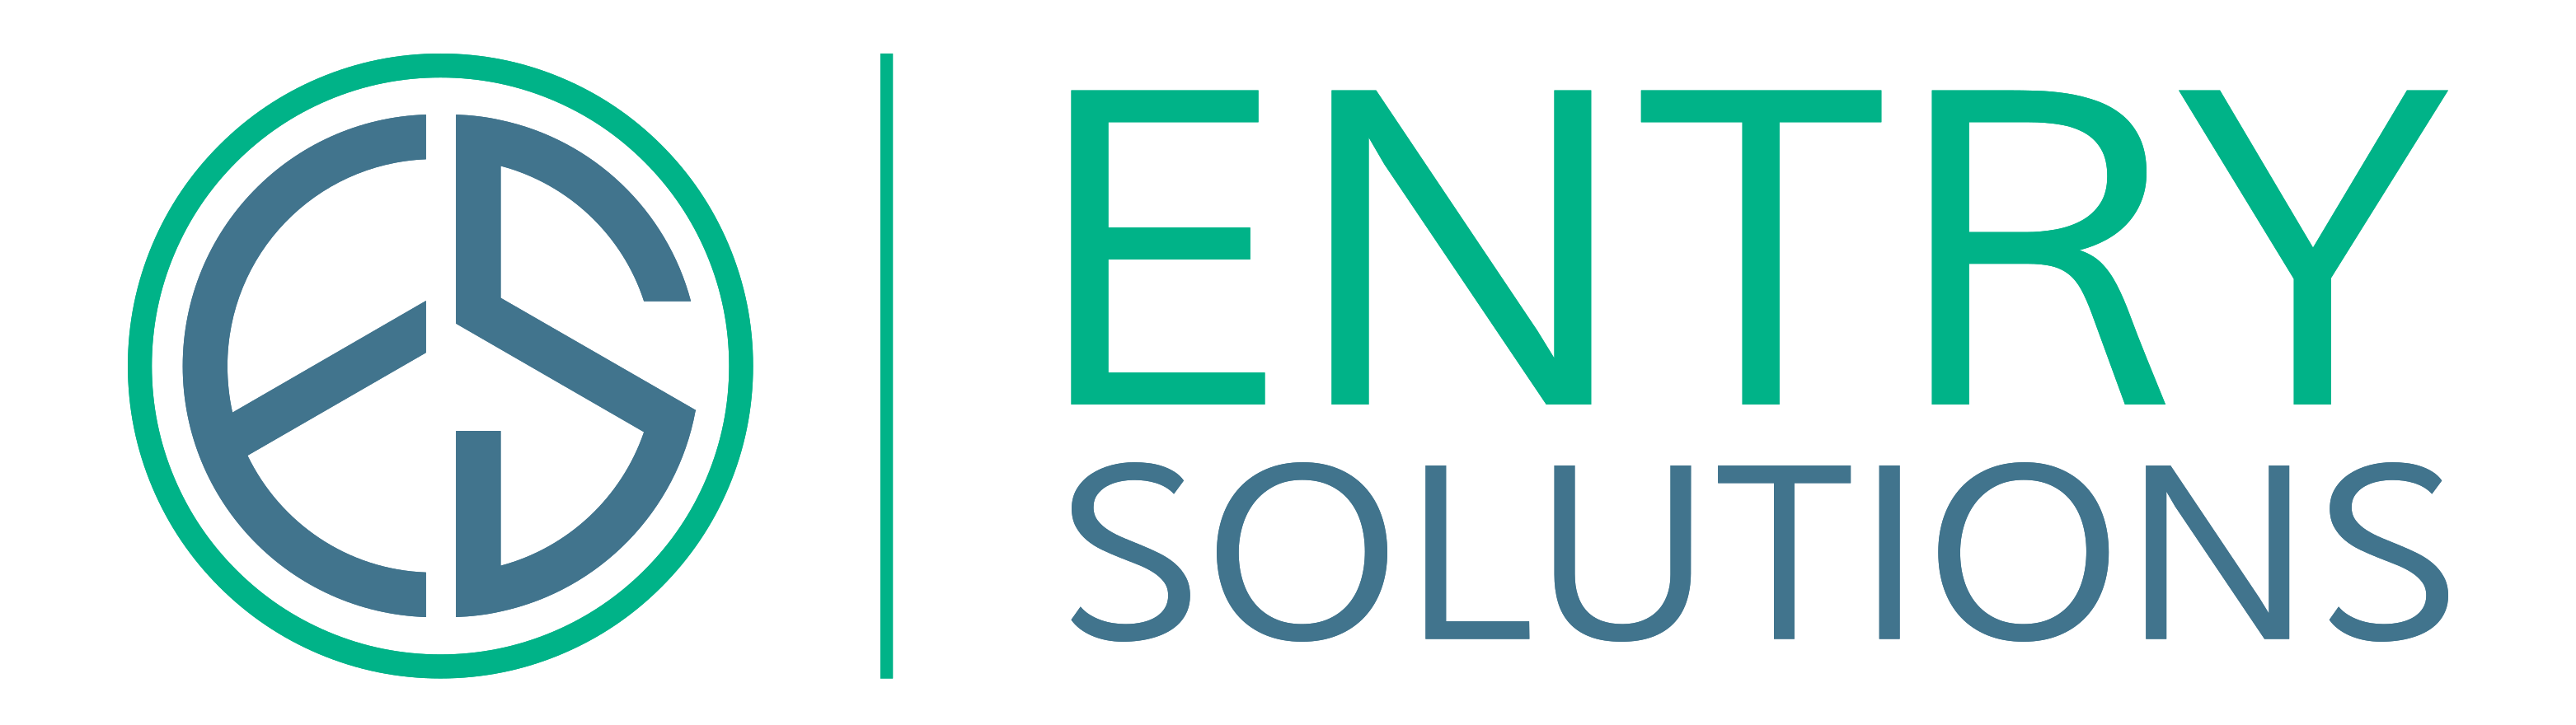 Entry Solutions - Parlofonie, Videofonie en toegangscontrole